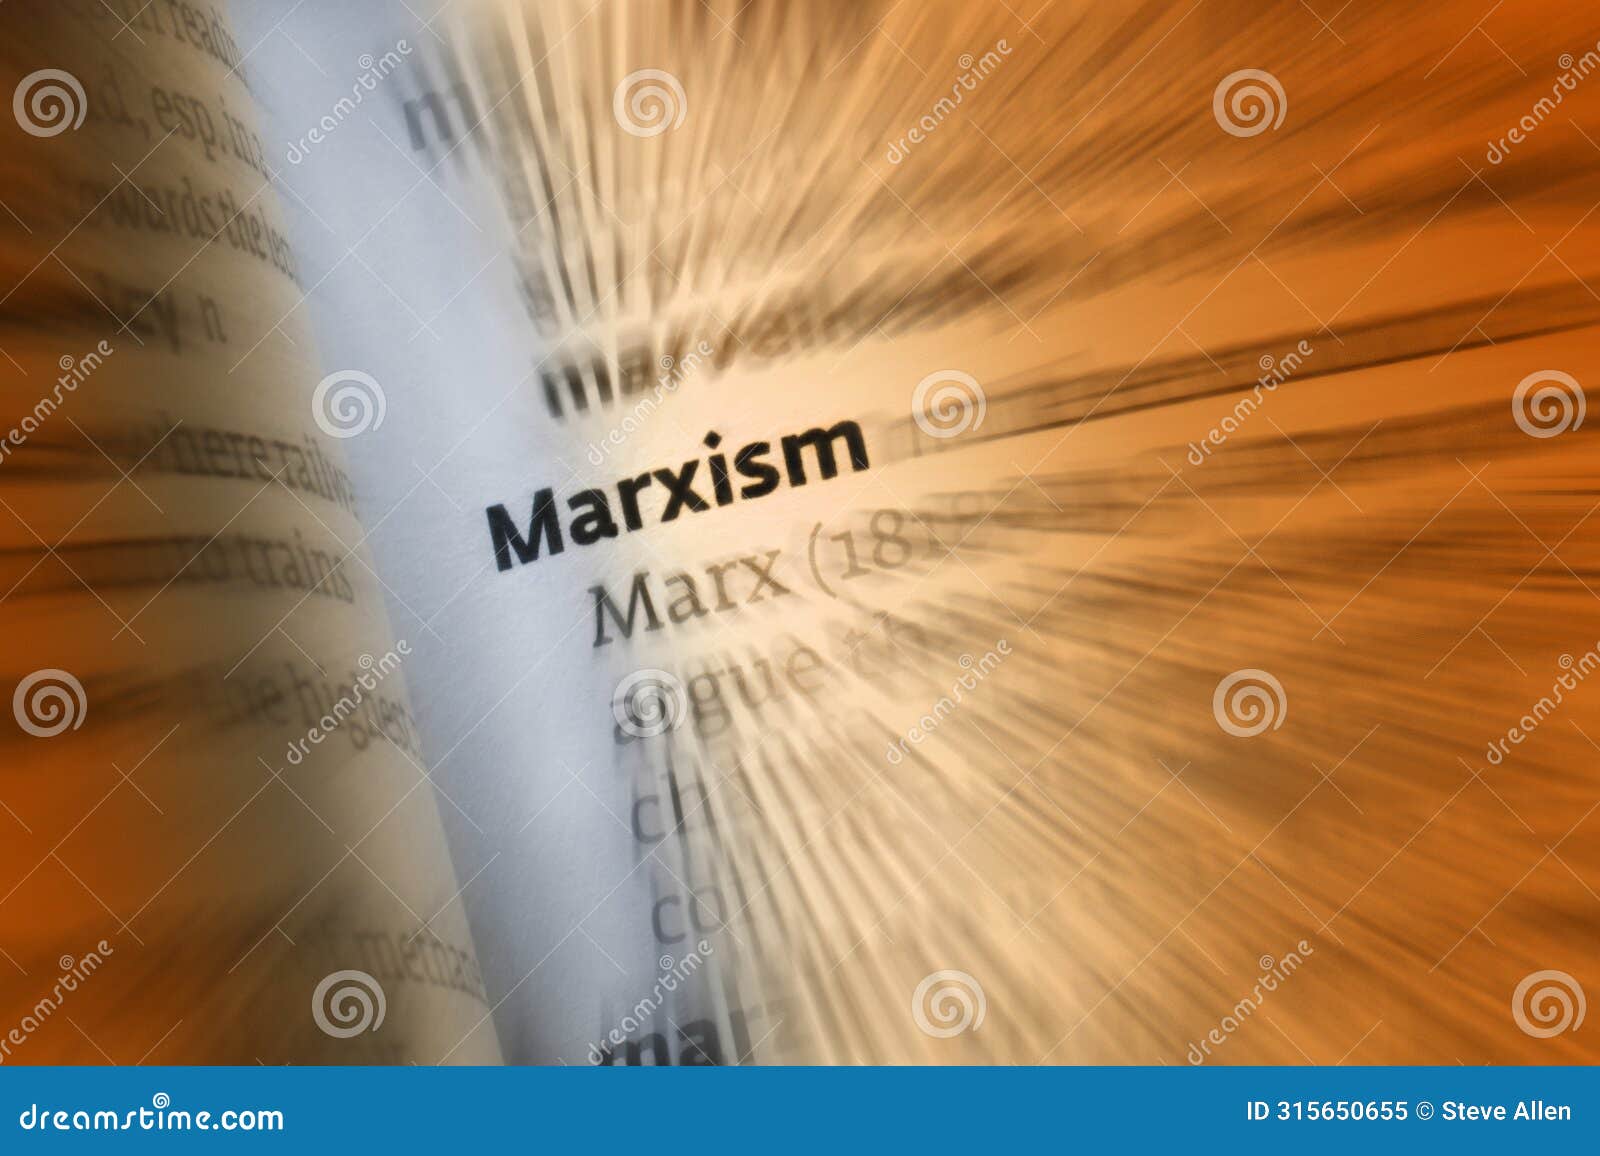 marxism - carl marx